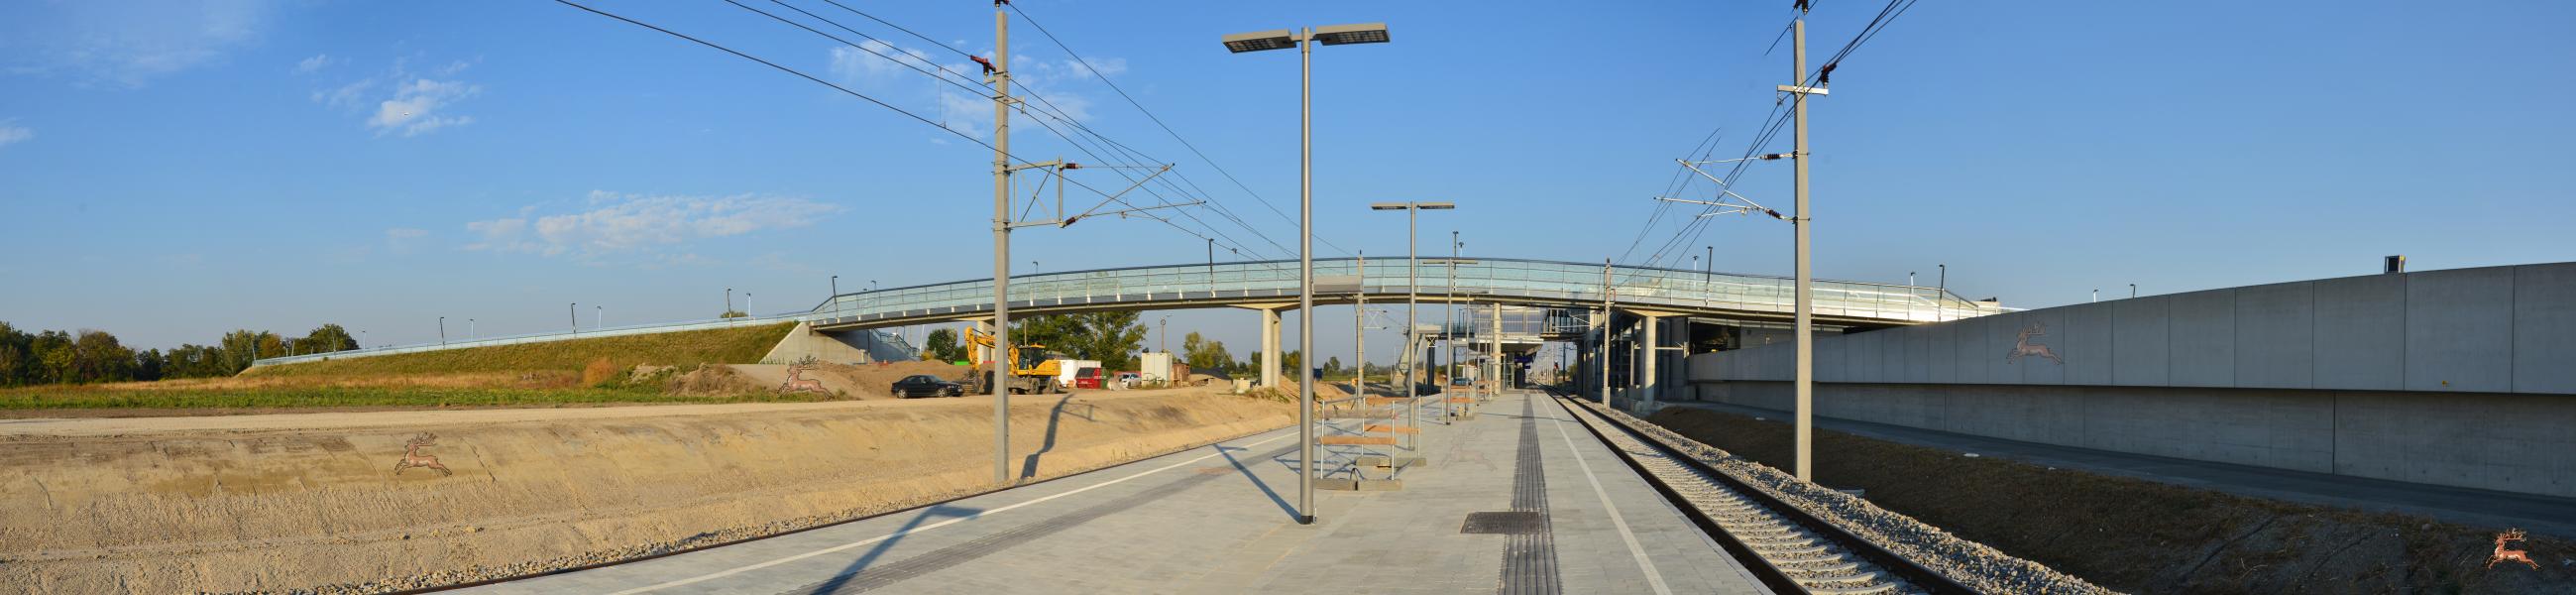 Panorama Ostbahn